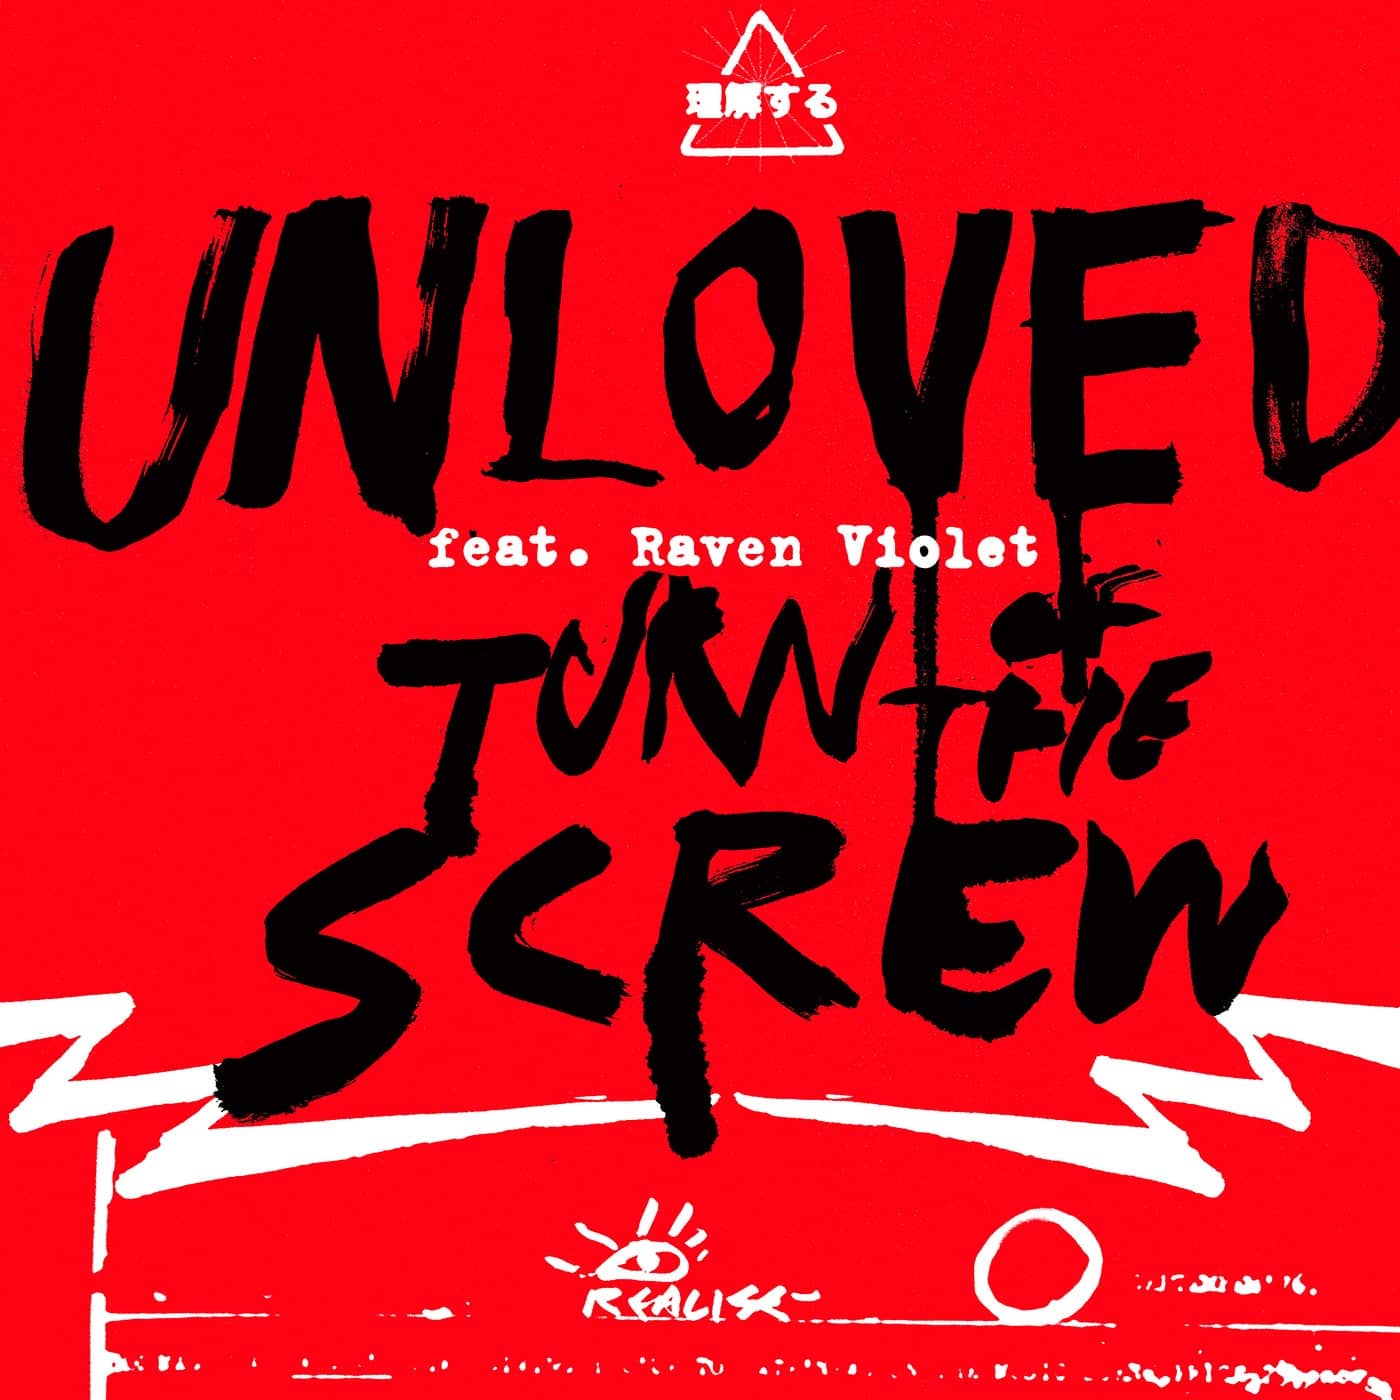 image cover: Unloved, Raven Violet - Turn of the screw remixes feat. Raven Violet / HVN671DIGR